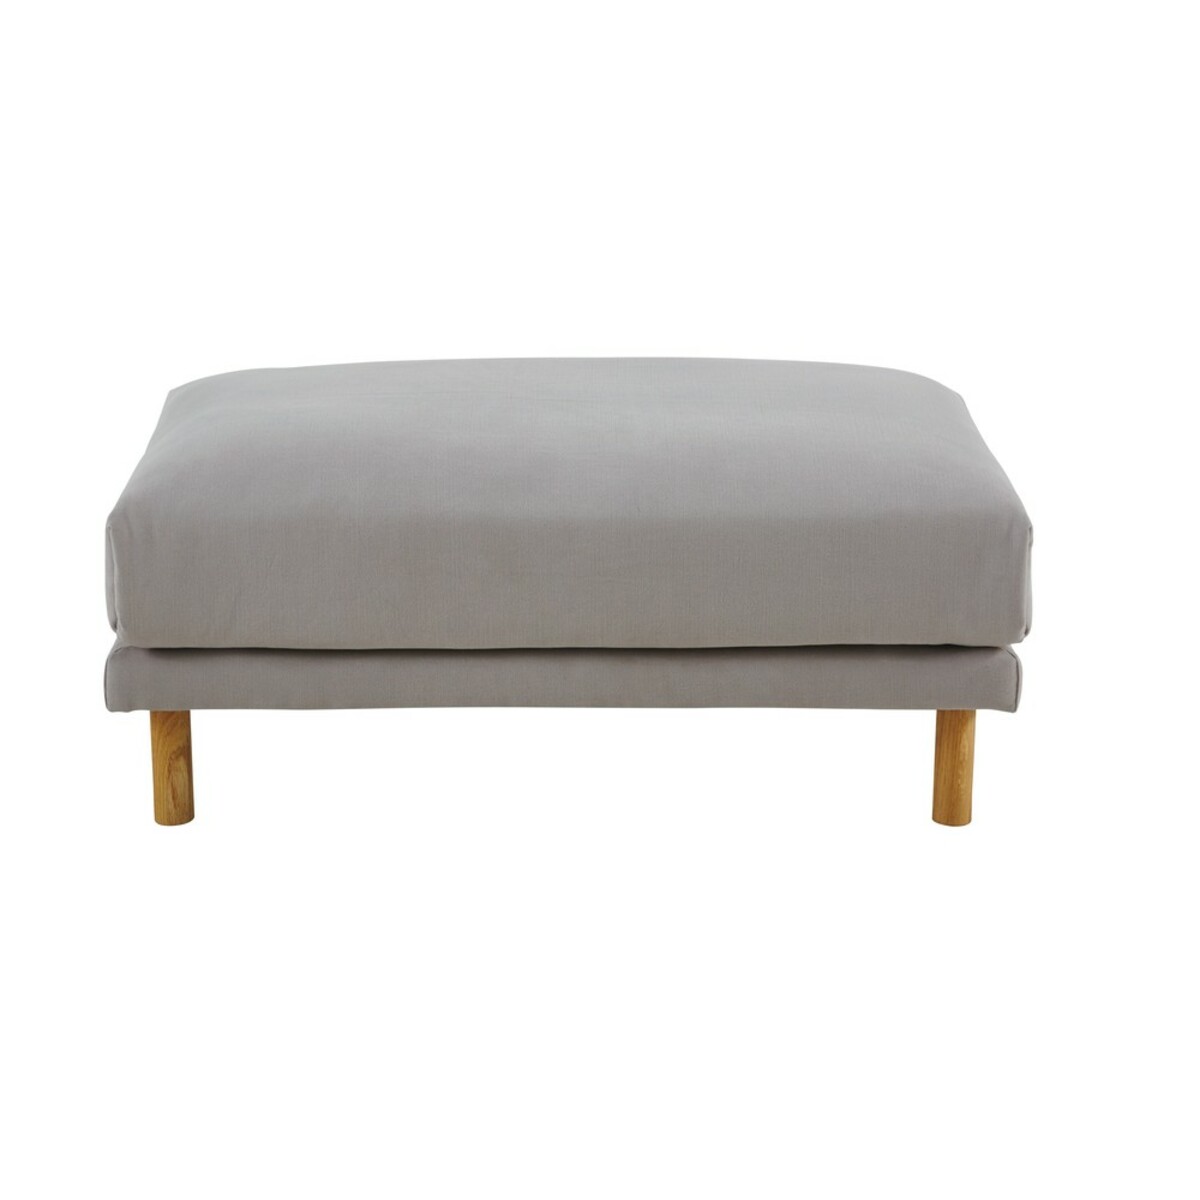 Puf de sofá modular de algodón y lino gris claro Raoul